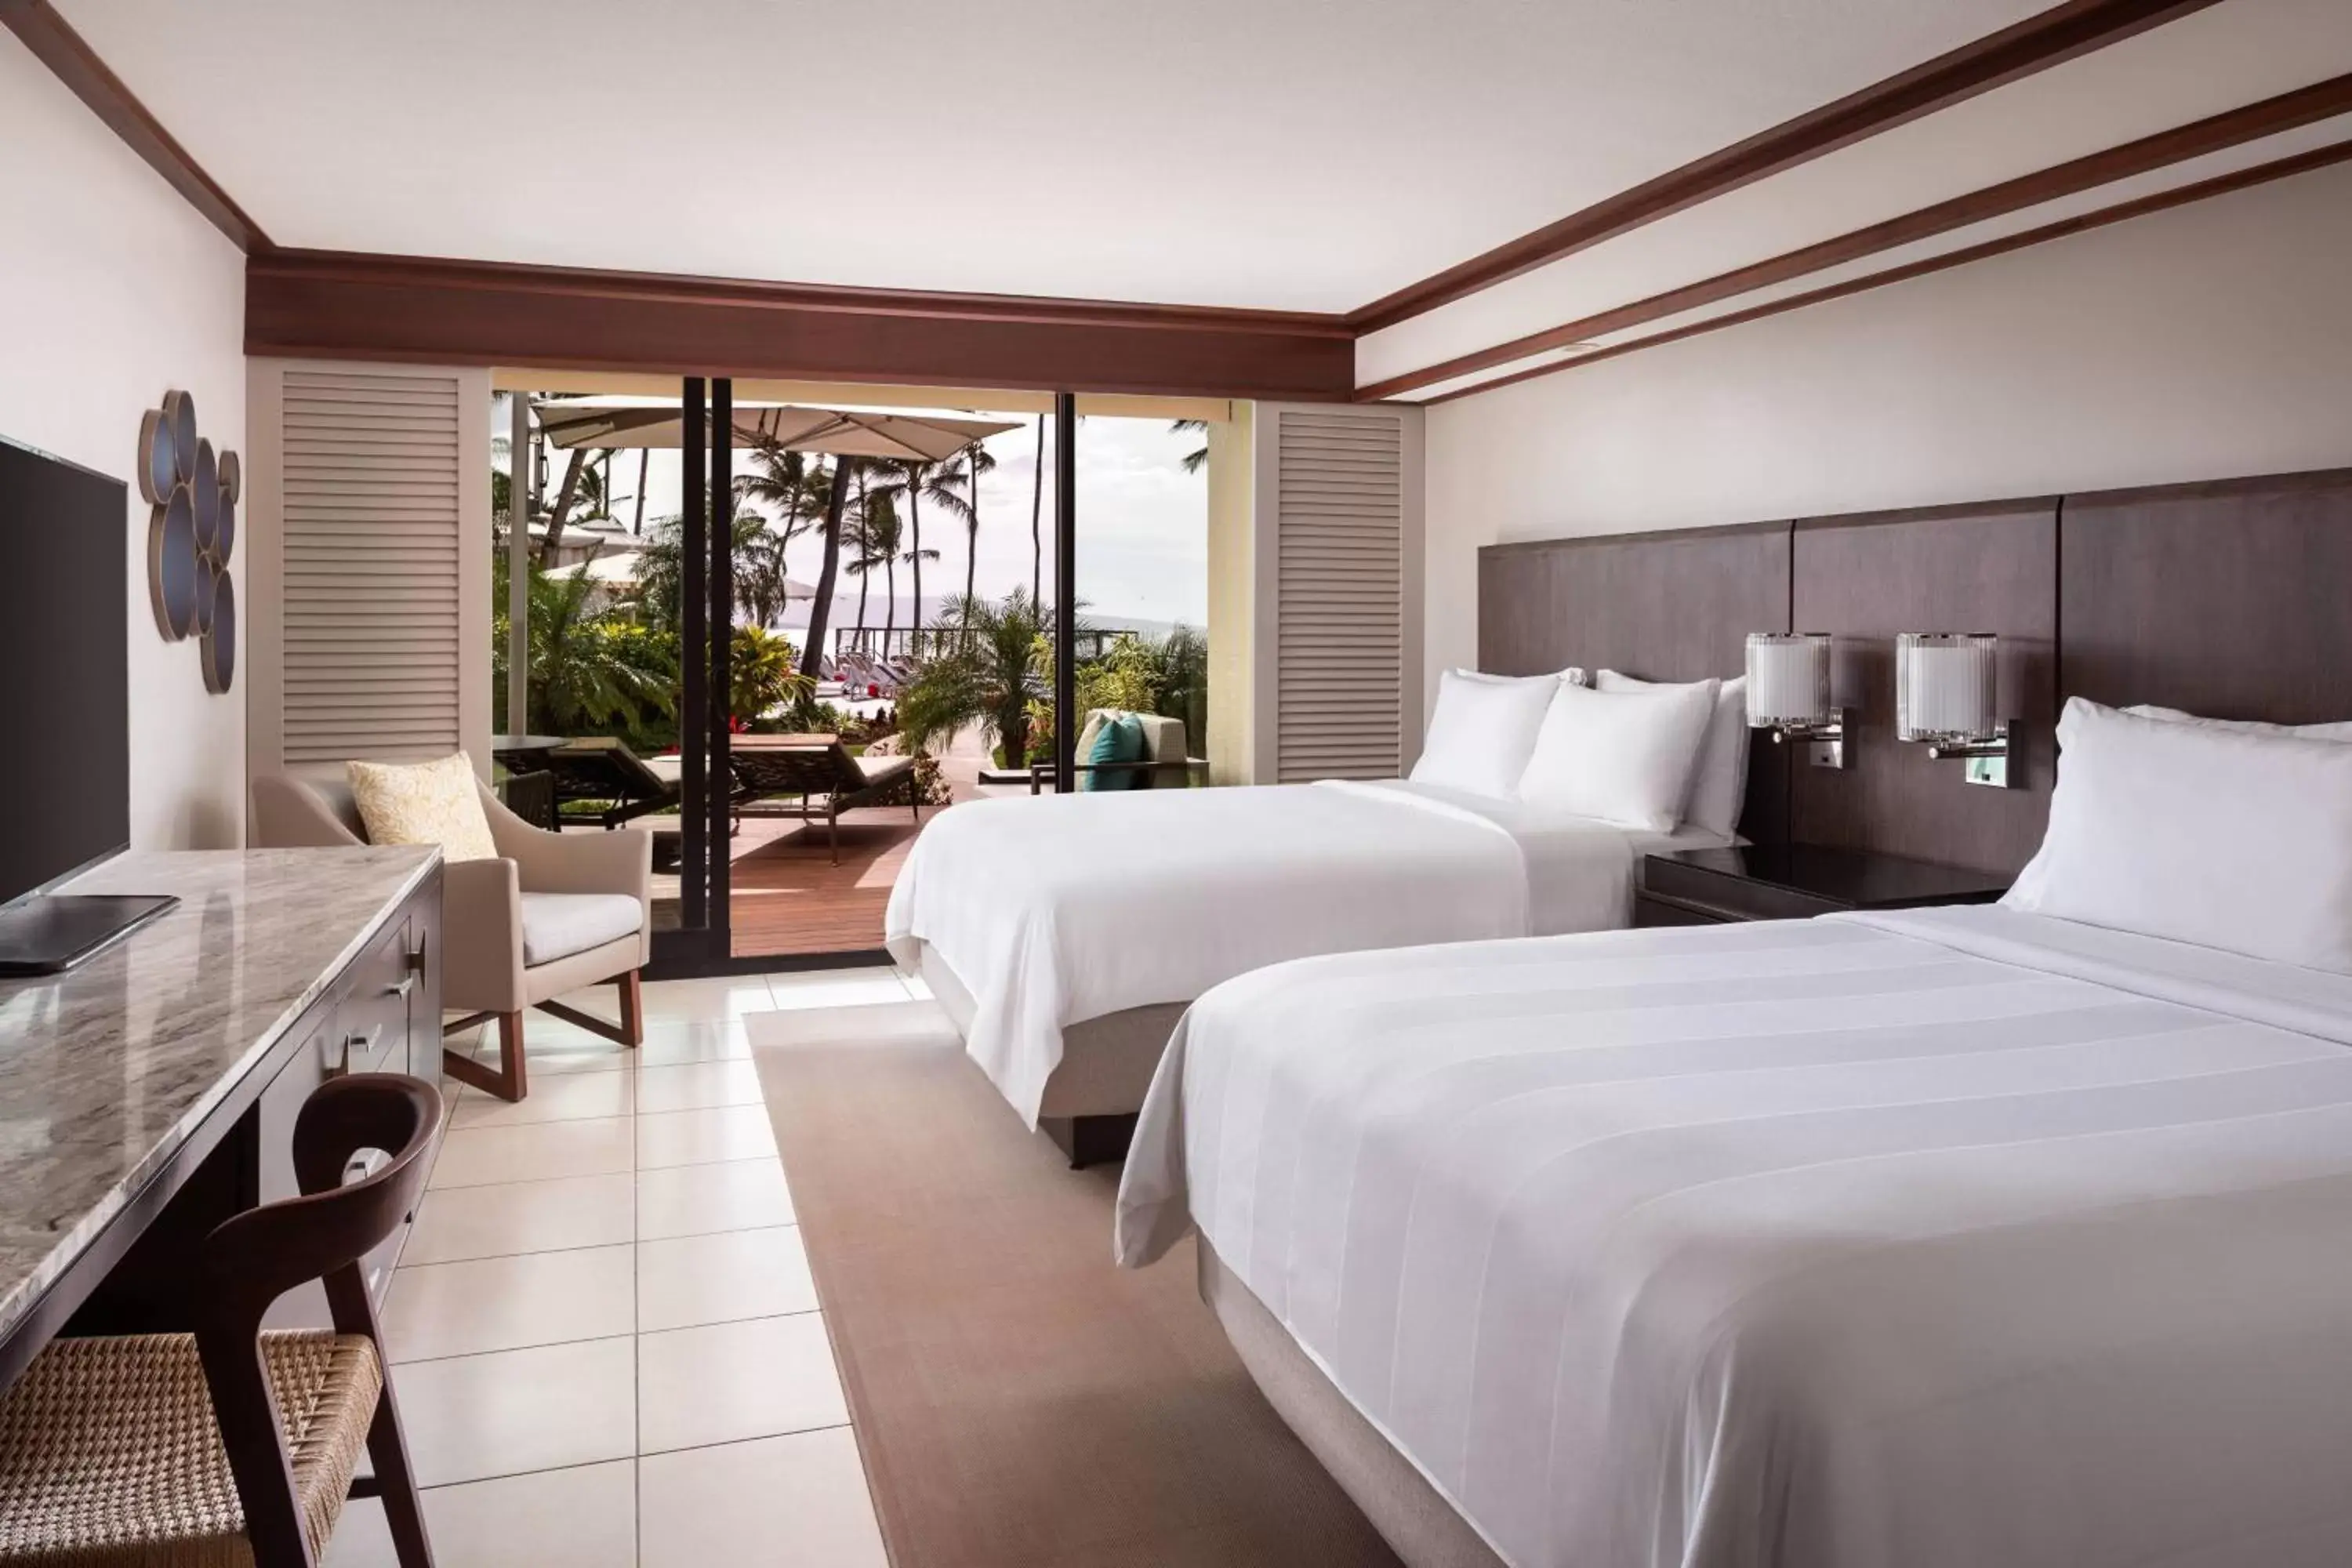 Photo of the whole room in Wailea Beach Resort - Marriott, Maui